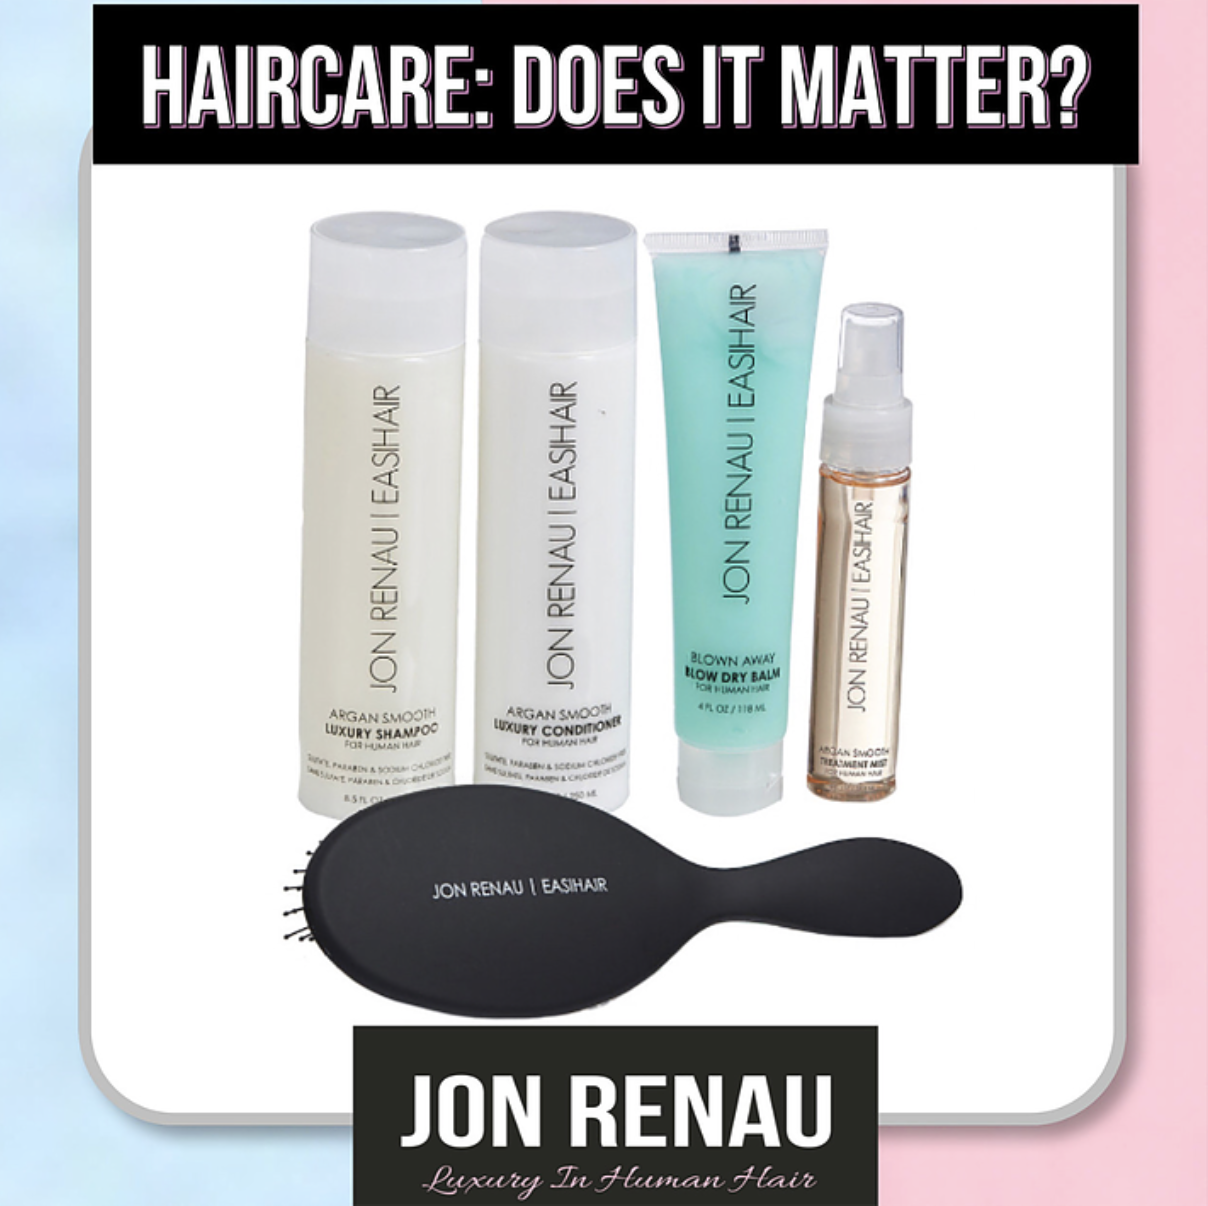 HUMAN HAIR CARE - Featuring Jon Renau Argan Care Products